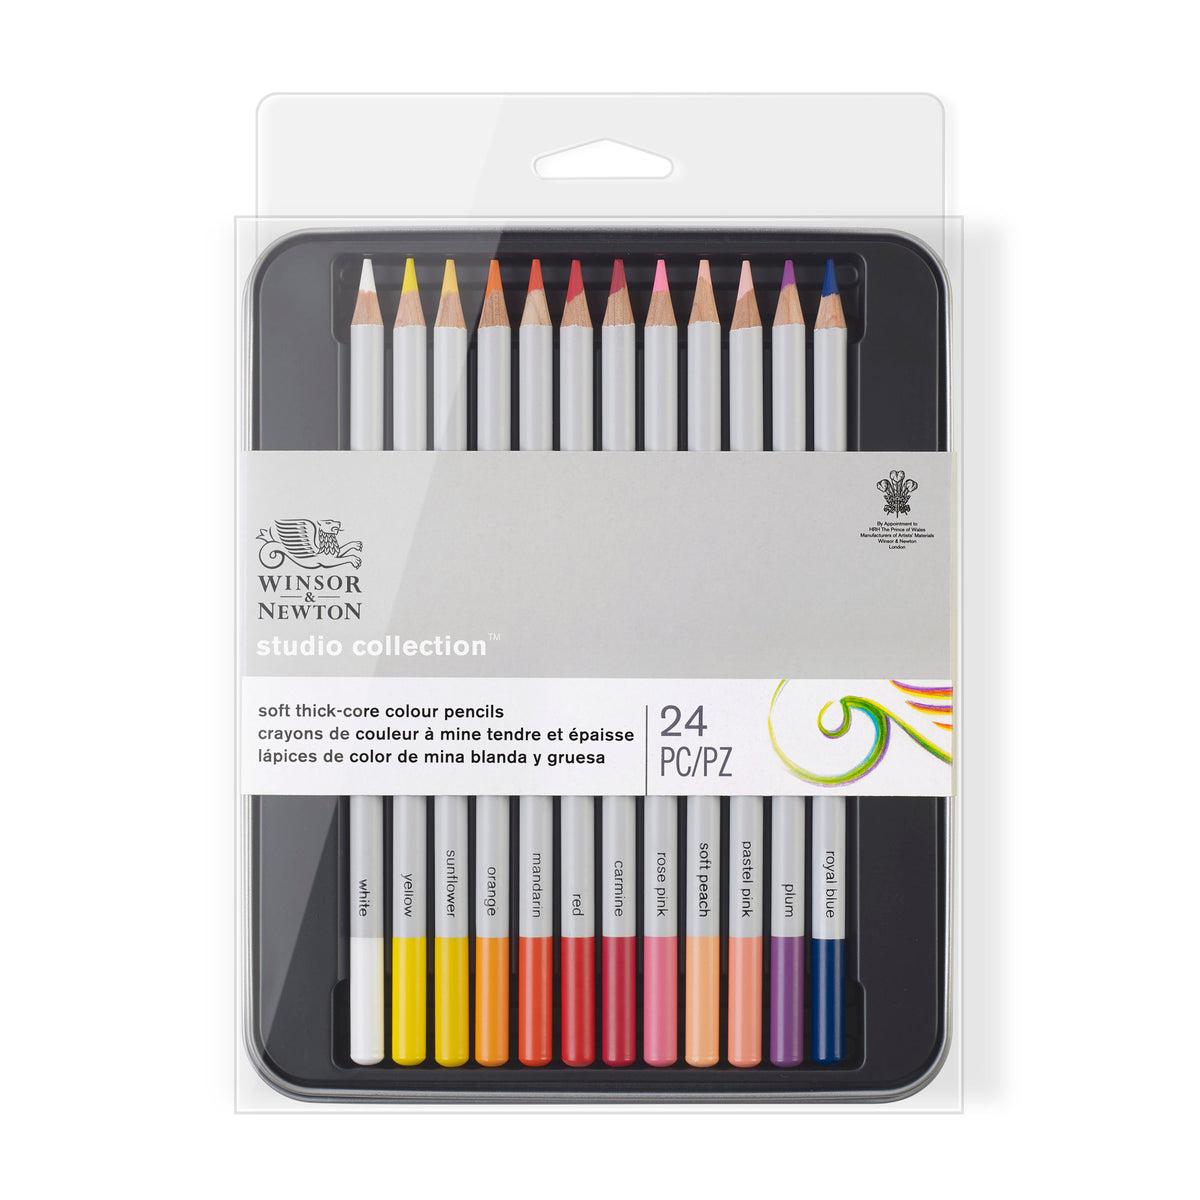 Winsor &amp; Newton Studio Collection Soft thick-core colour pencils - Set of 24